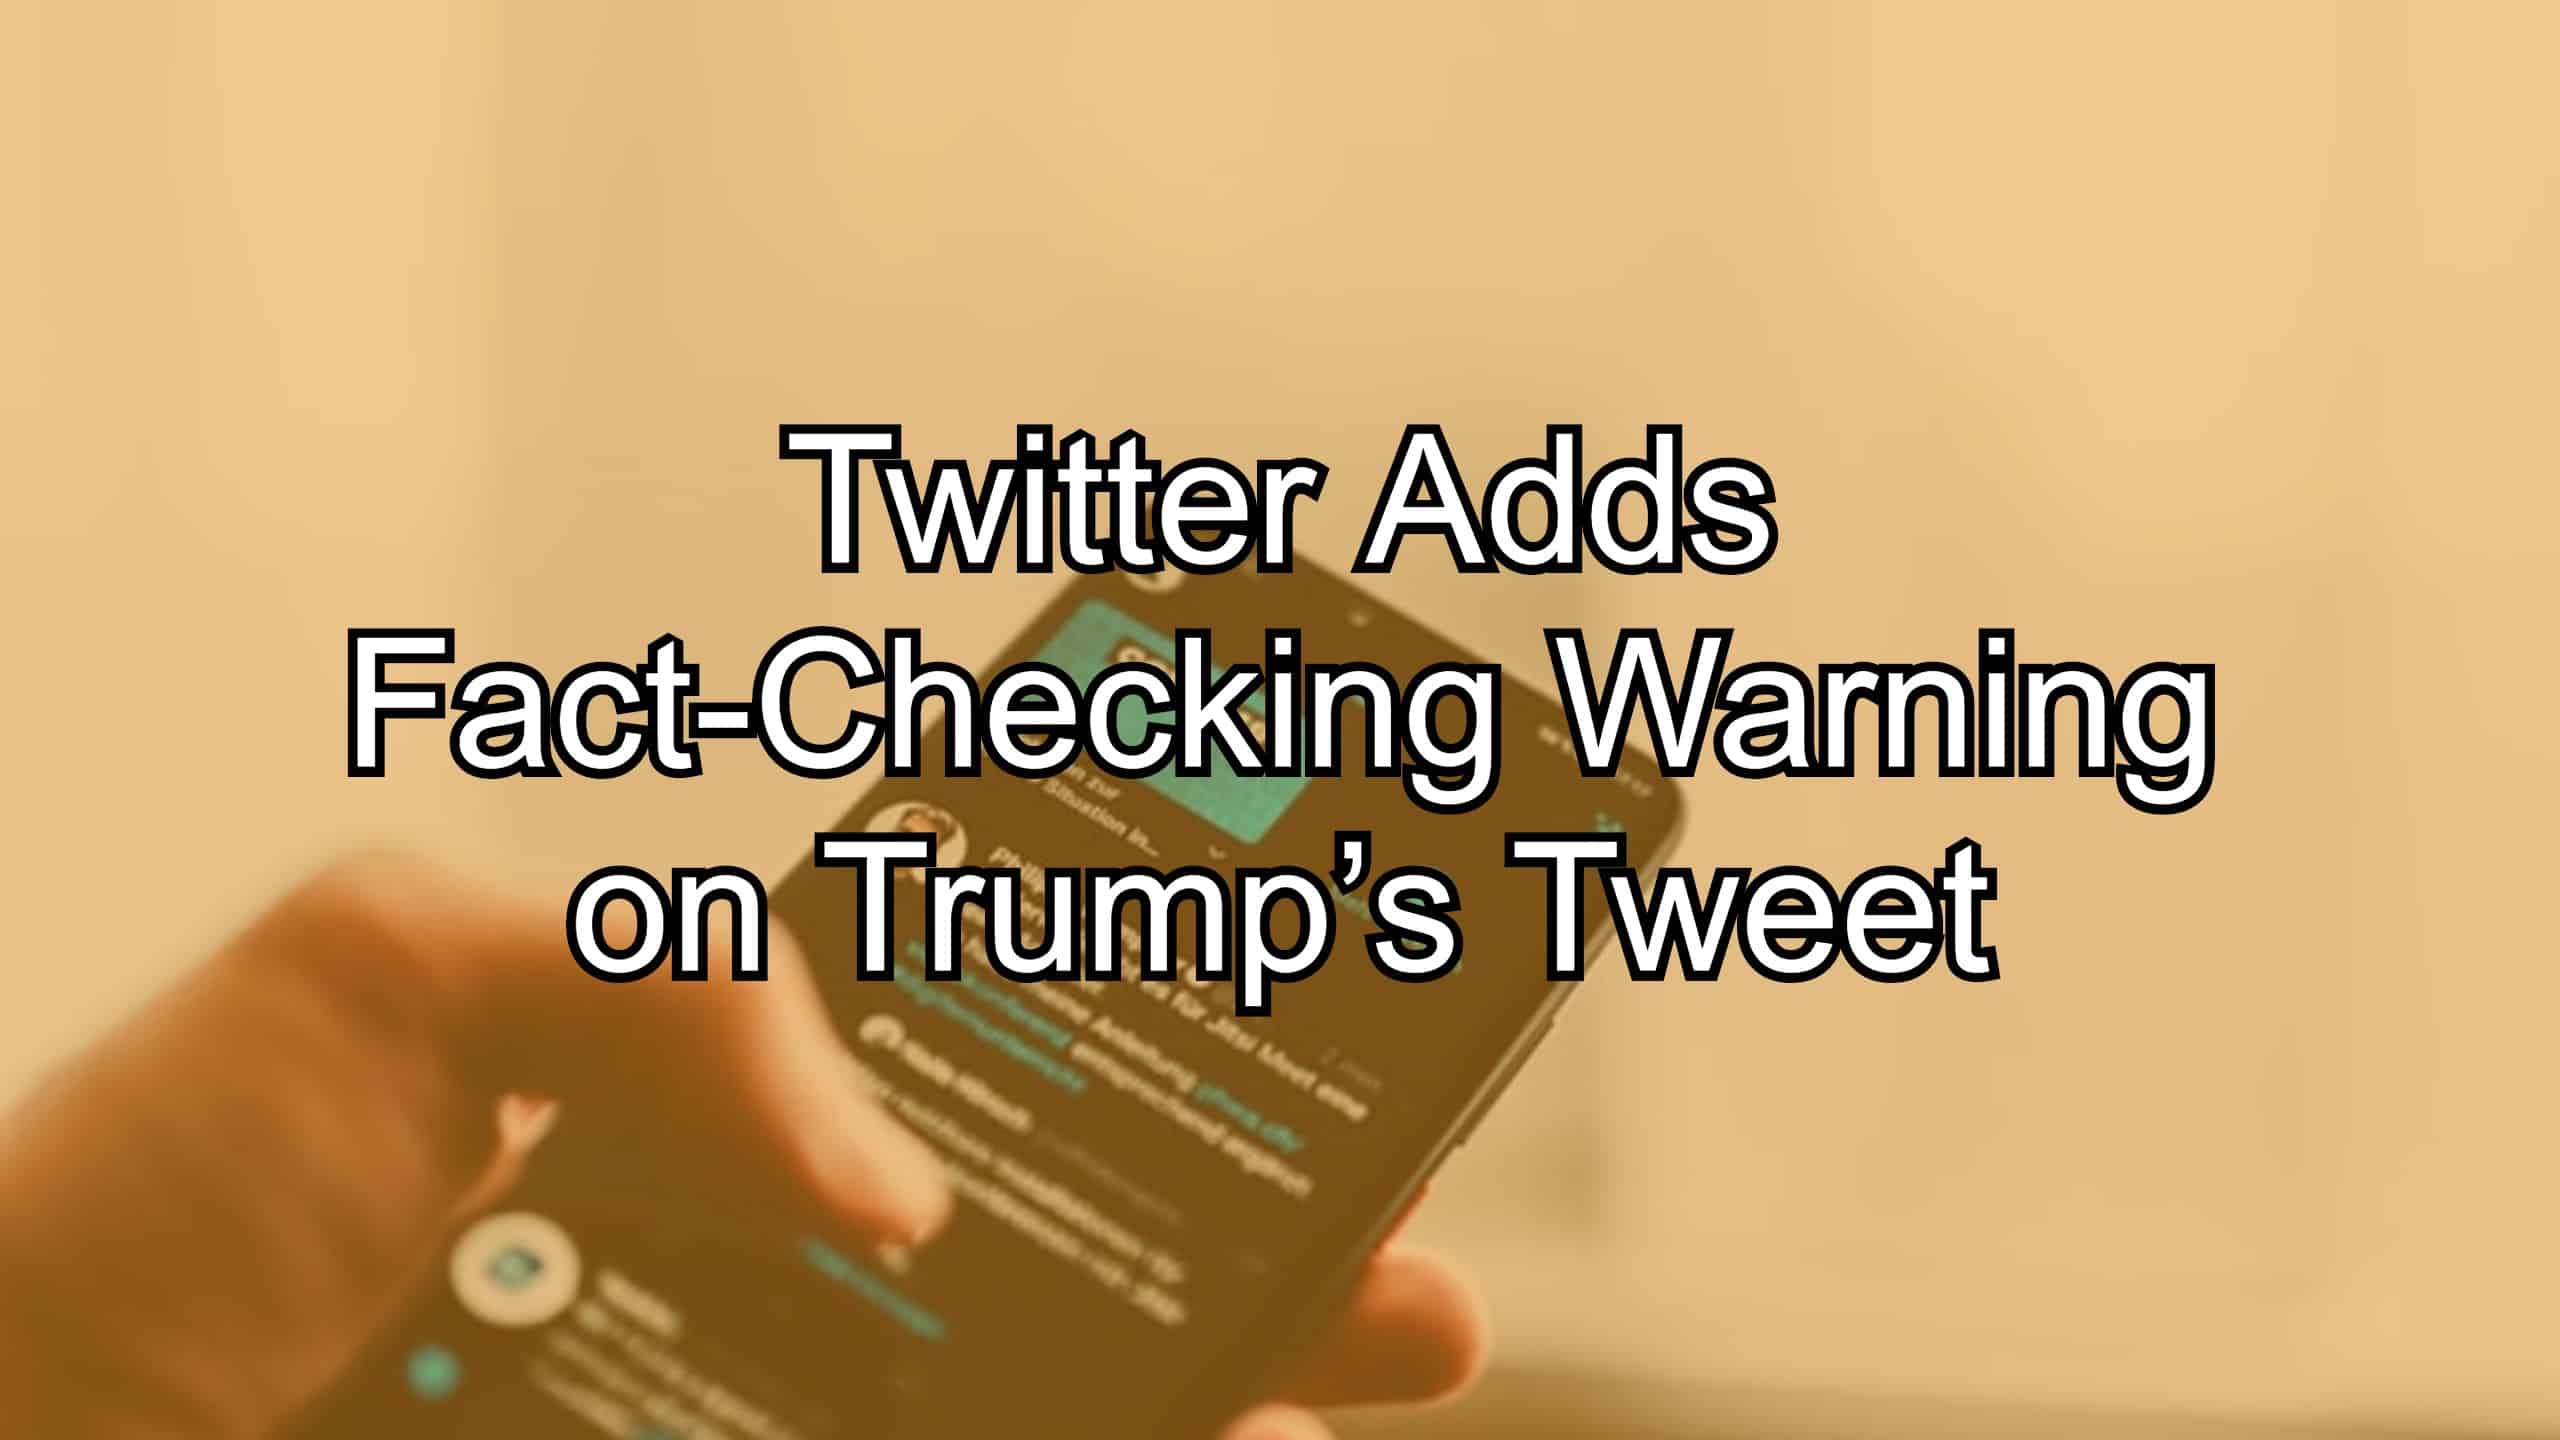 Twitter Adds Fact-Checking Warning on Trump’s Tweet